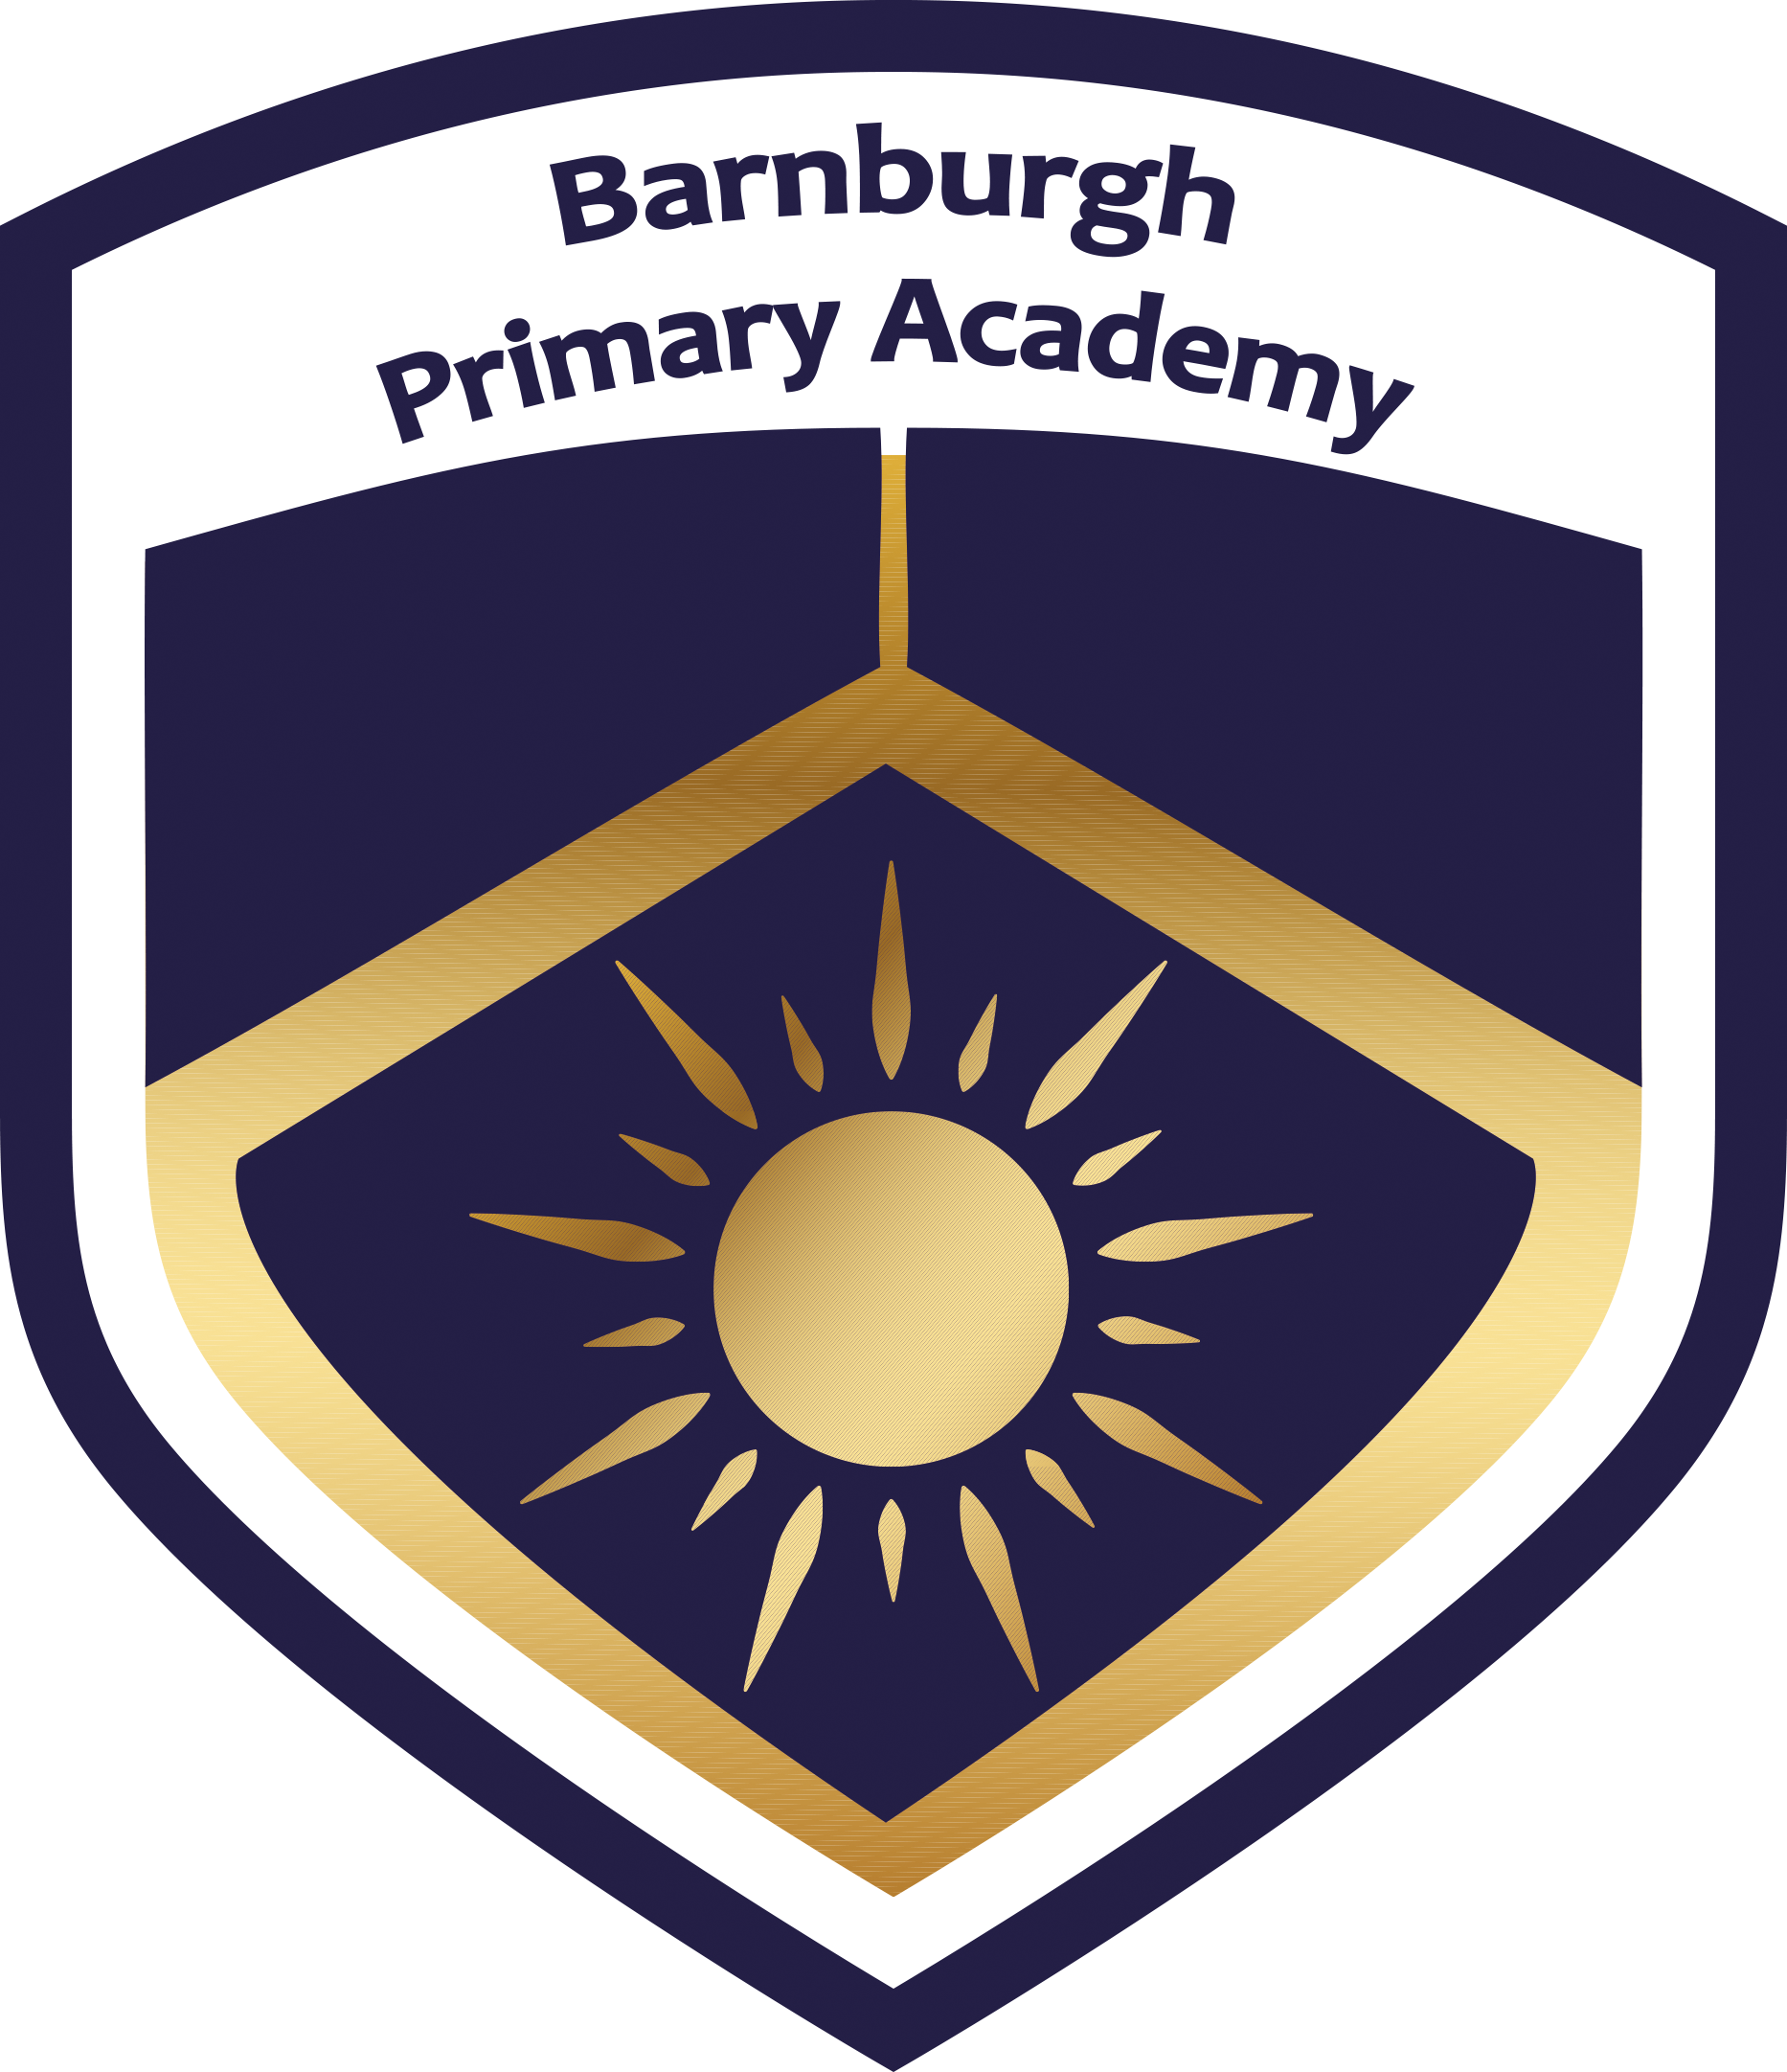 Barnburgh Primary Academy